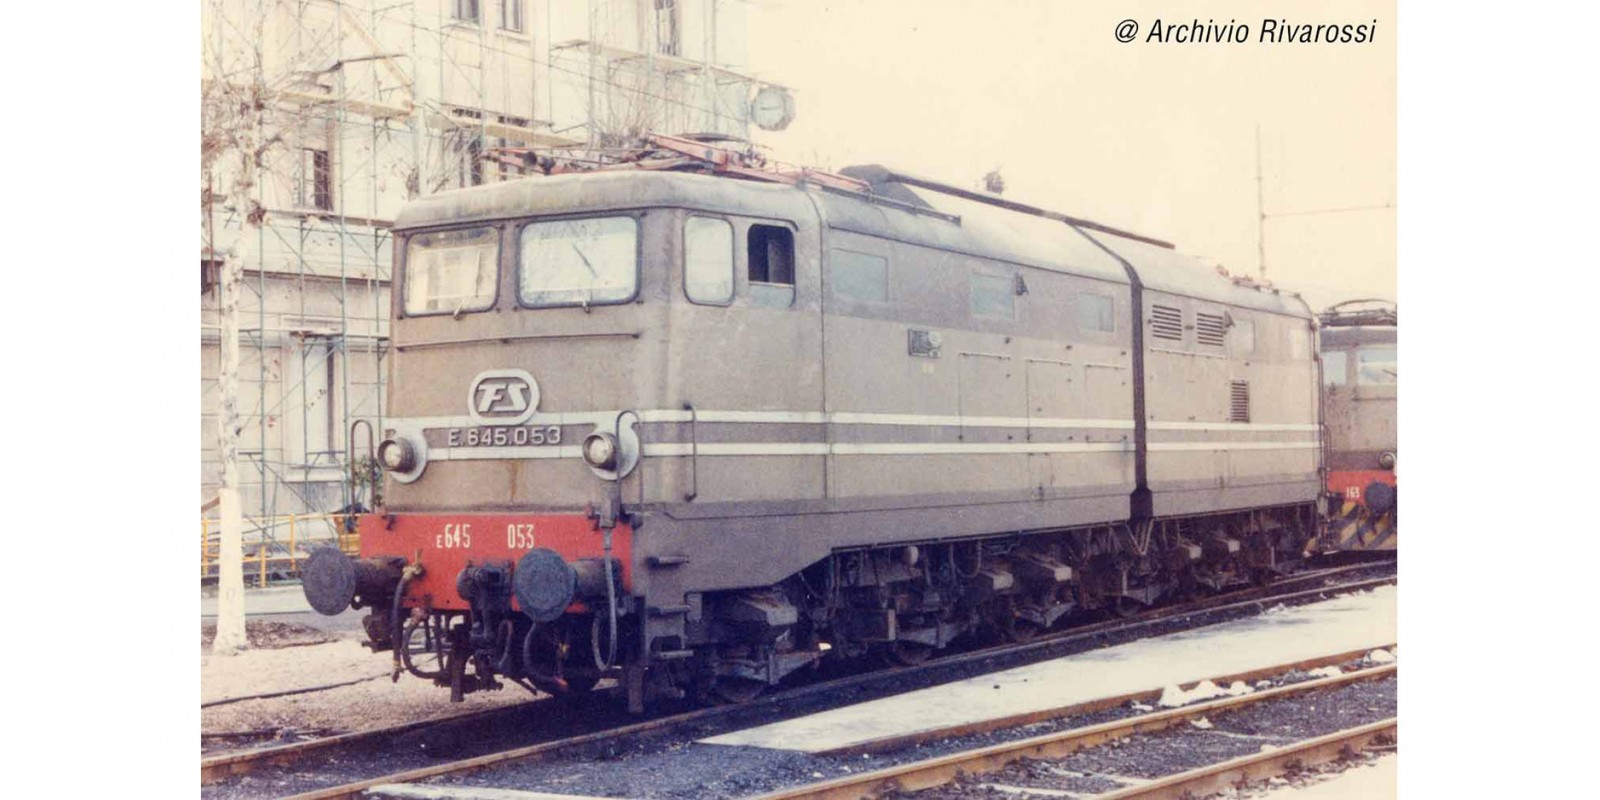 RI2870S FS, electric locomotive E.645 2nd series castano/isabella aluminium stripes, black bogies, ep. IV, with DCC Sound decoder